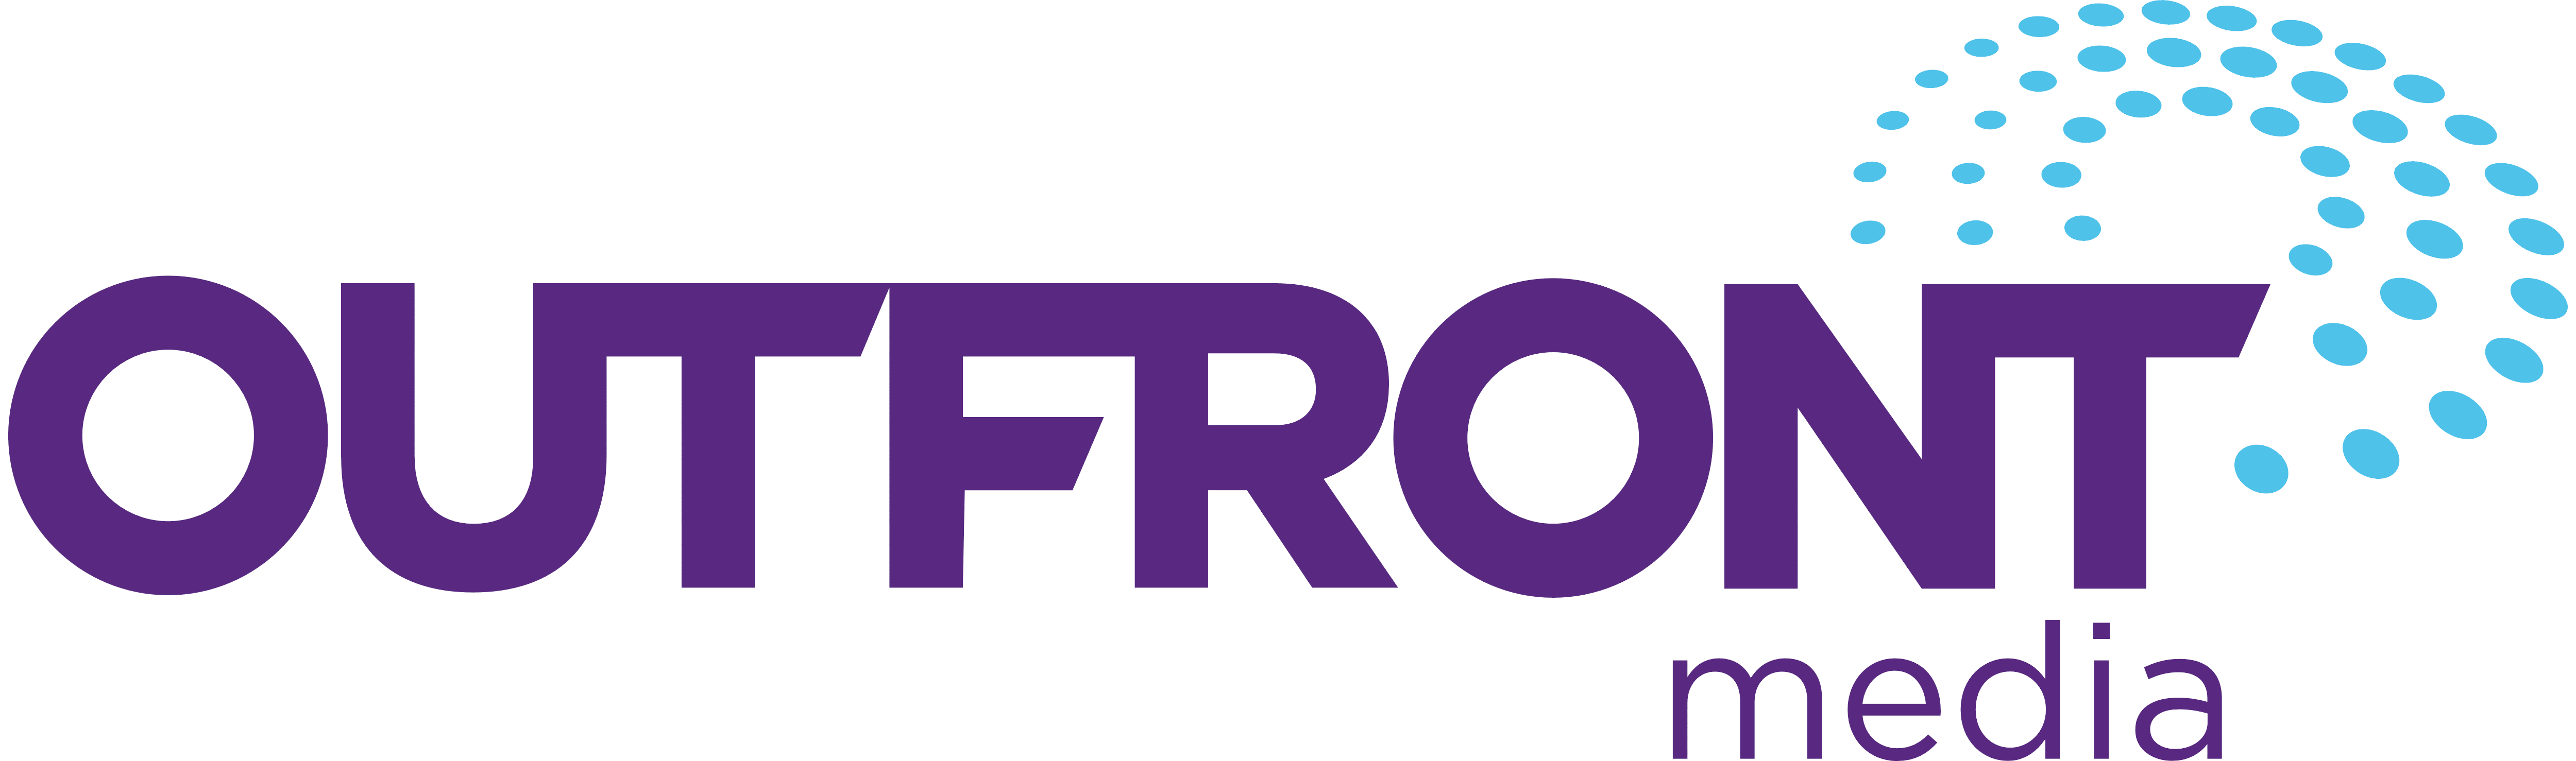 Outfront_Media_logo